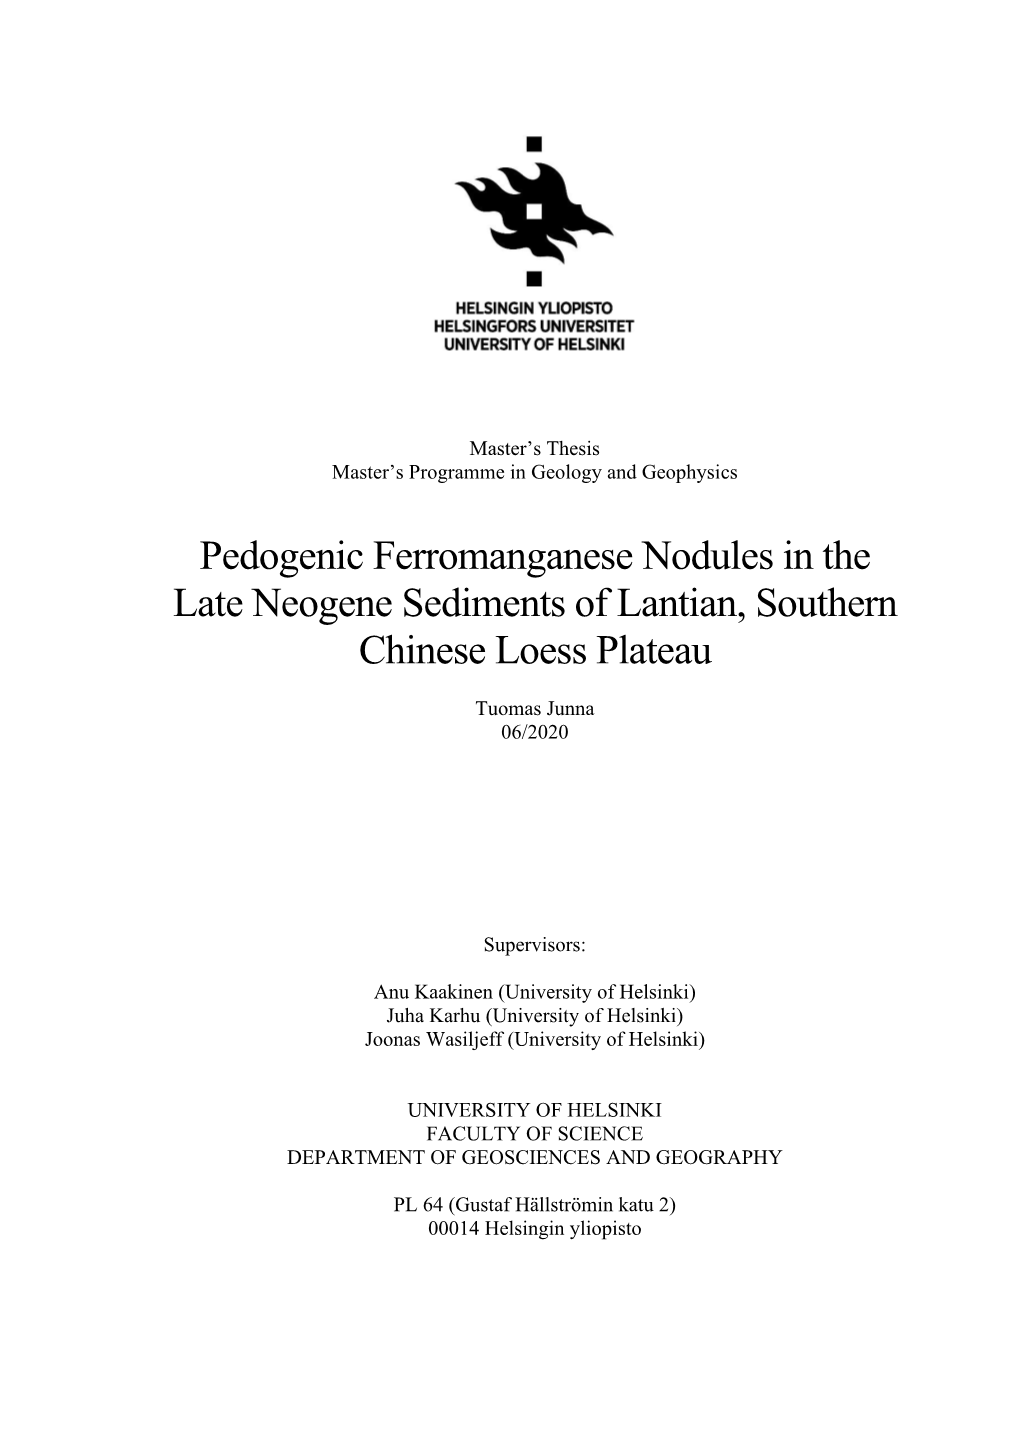 Pedogenic Ferromanganese Nodules in the Late Neogene Sediments of Lantian, Southern Chinese Loess Plateau